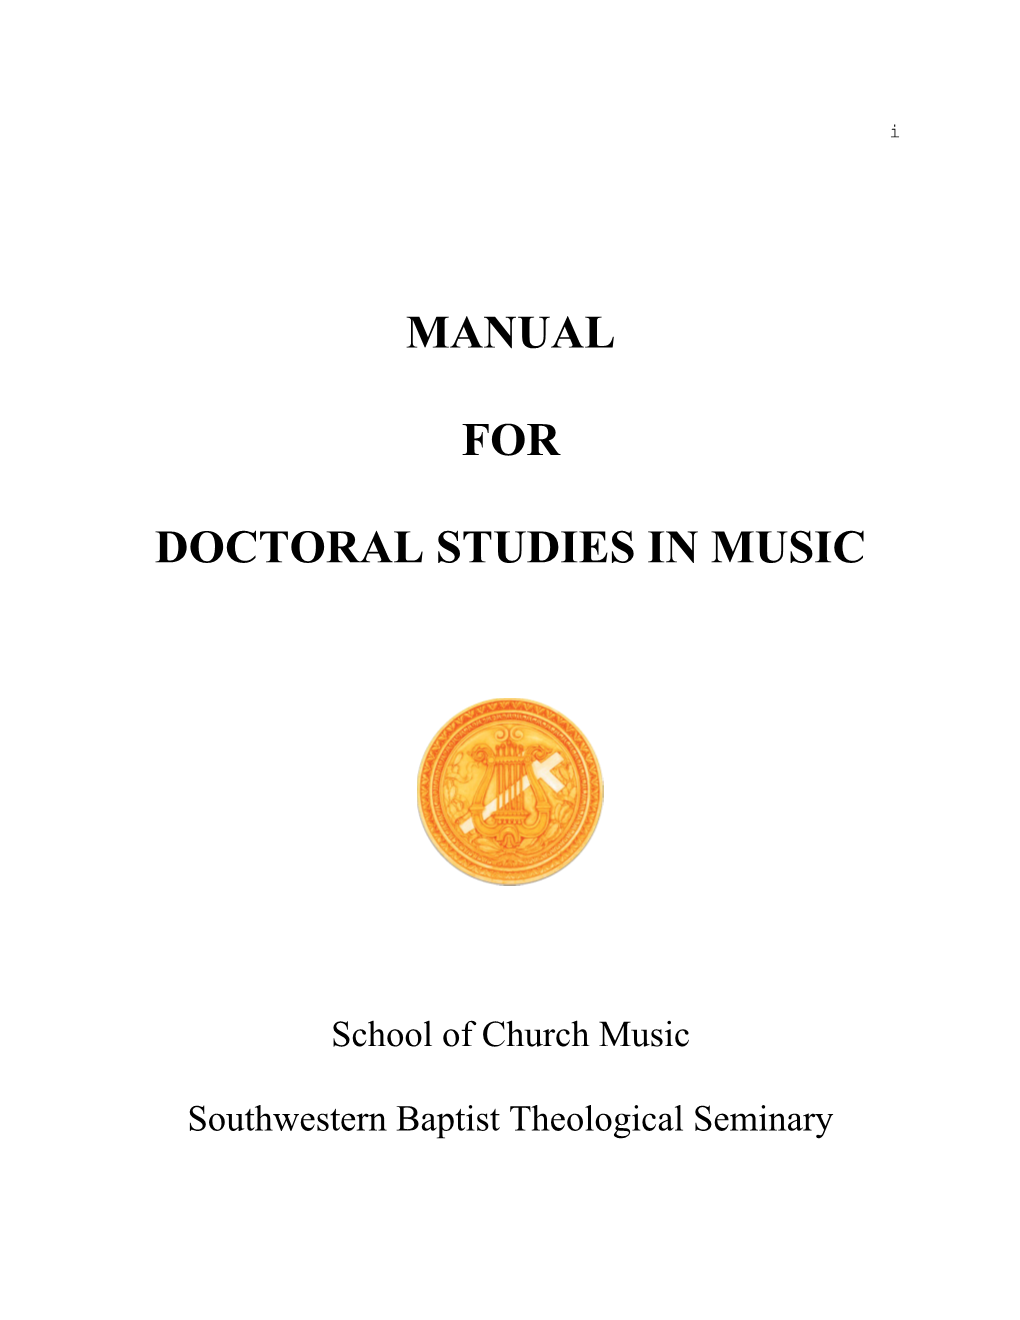 Doctoral Studies in Music